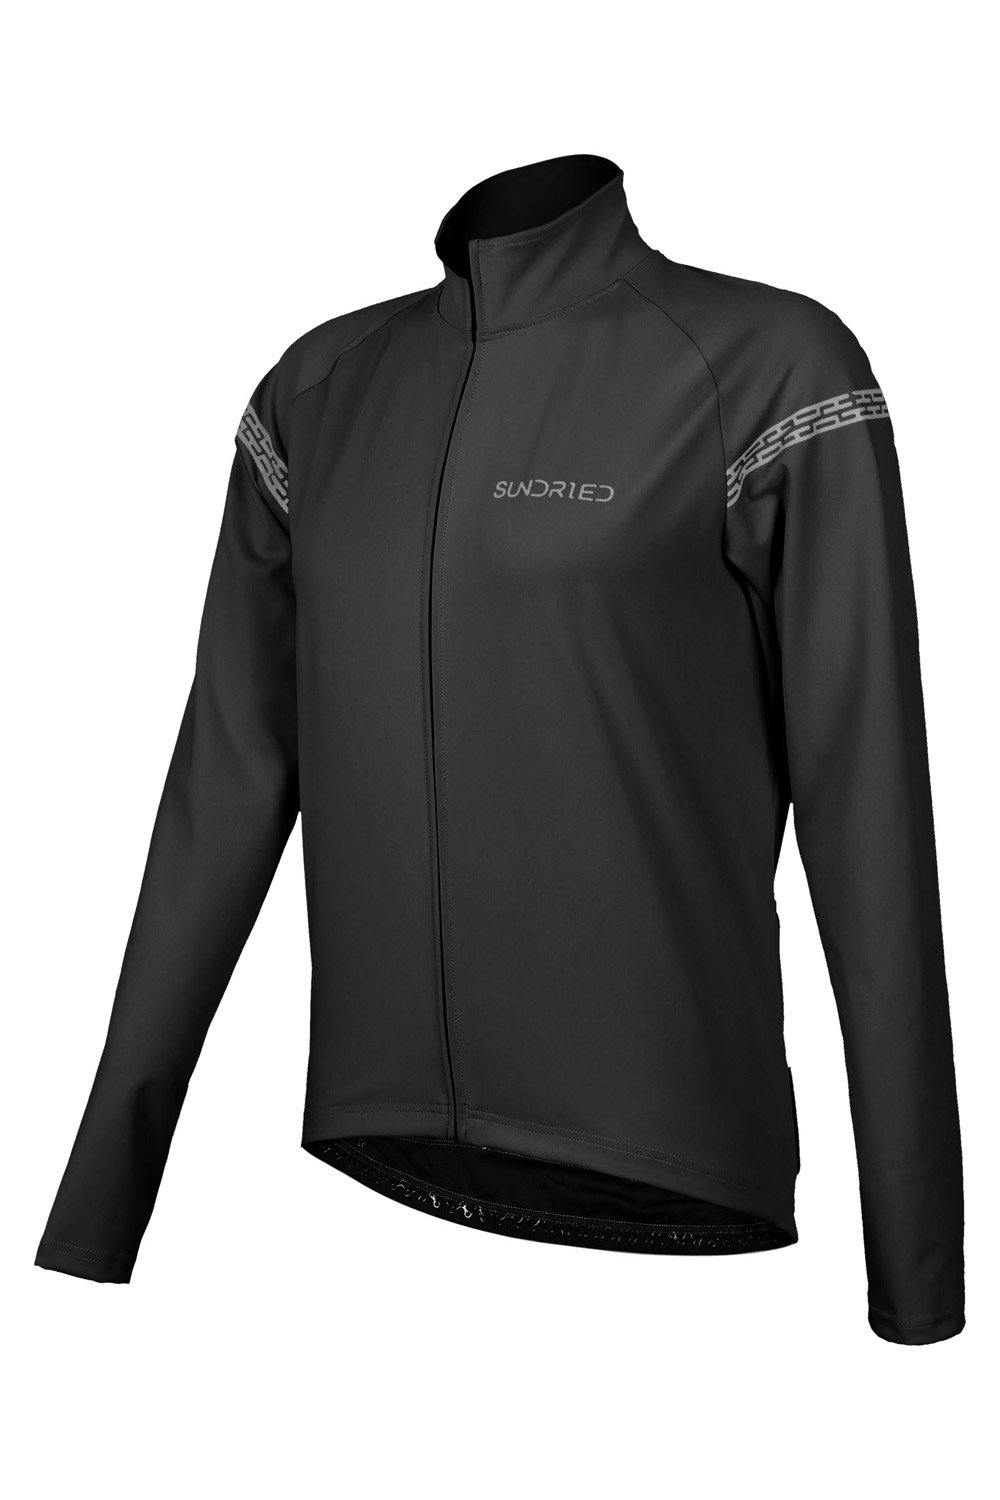 Sundried Equipe Women's Bike Jacket Cycle Jacket L Black SD0344 L Black Activewear